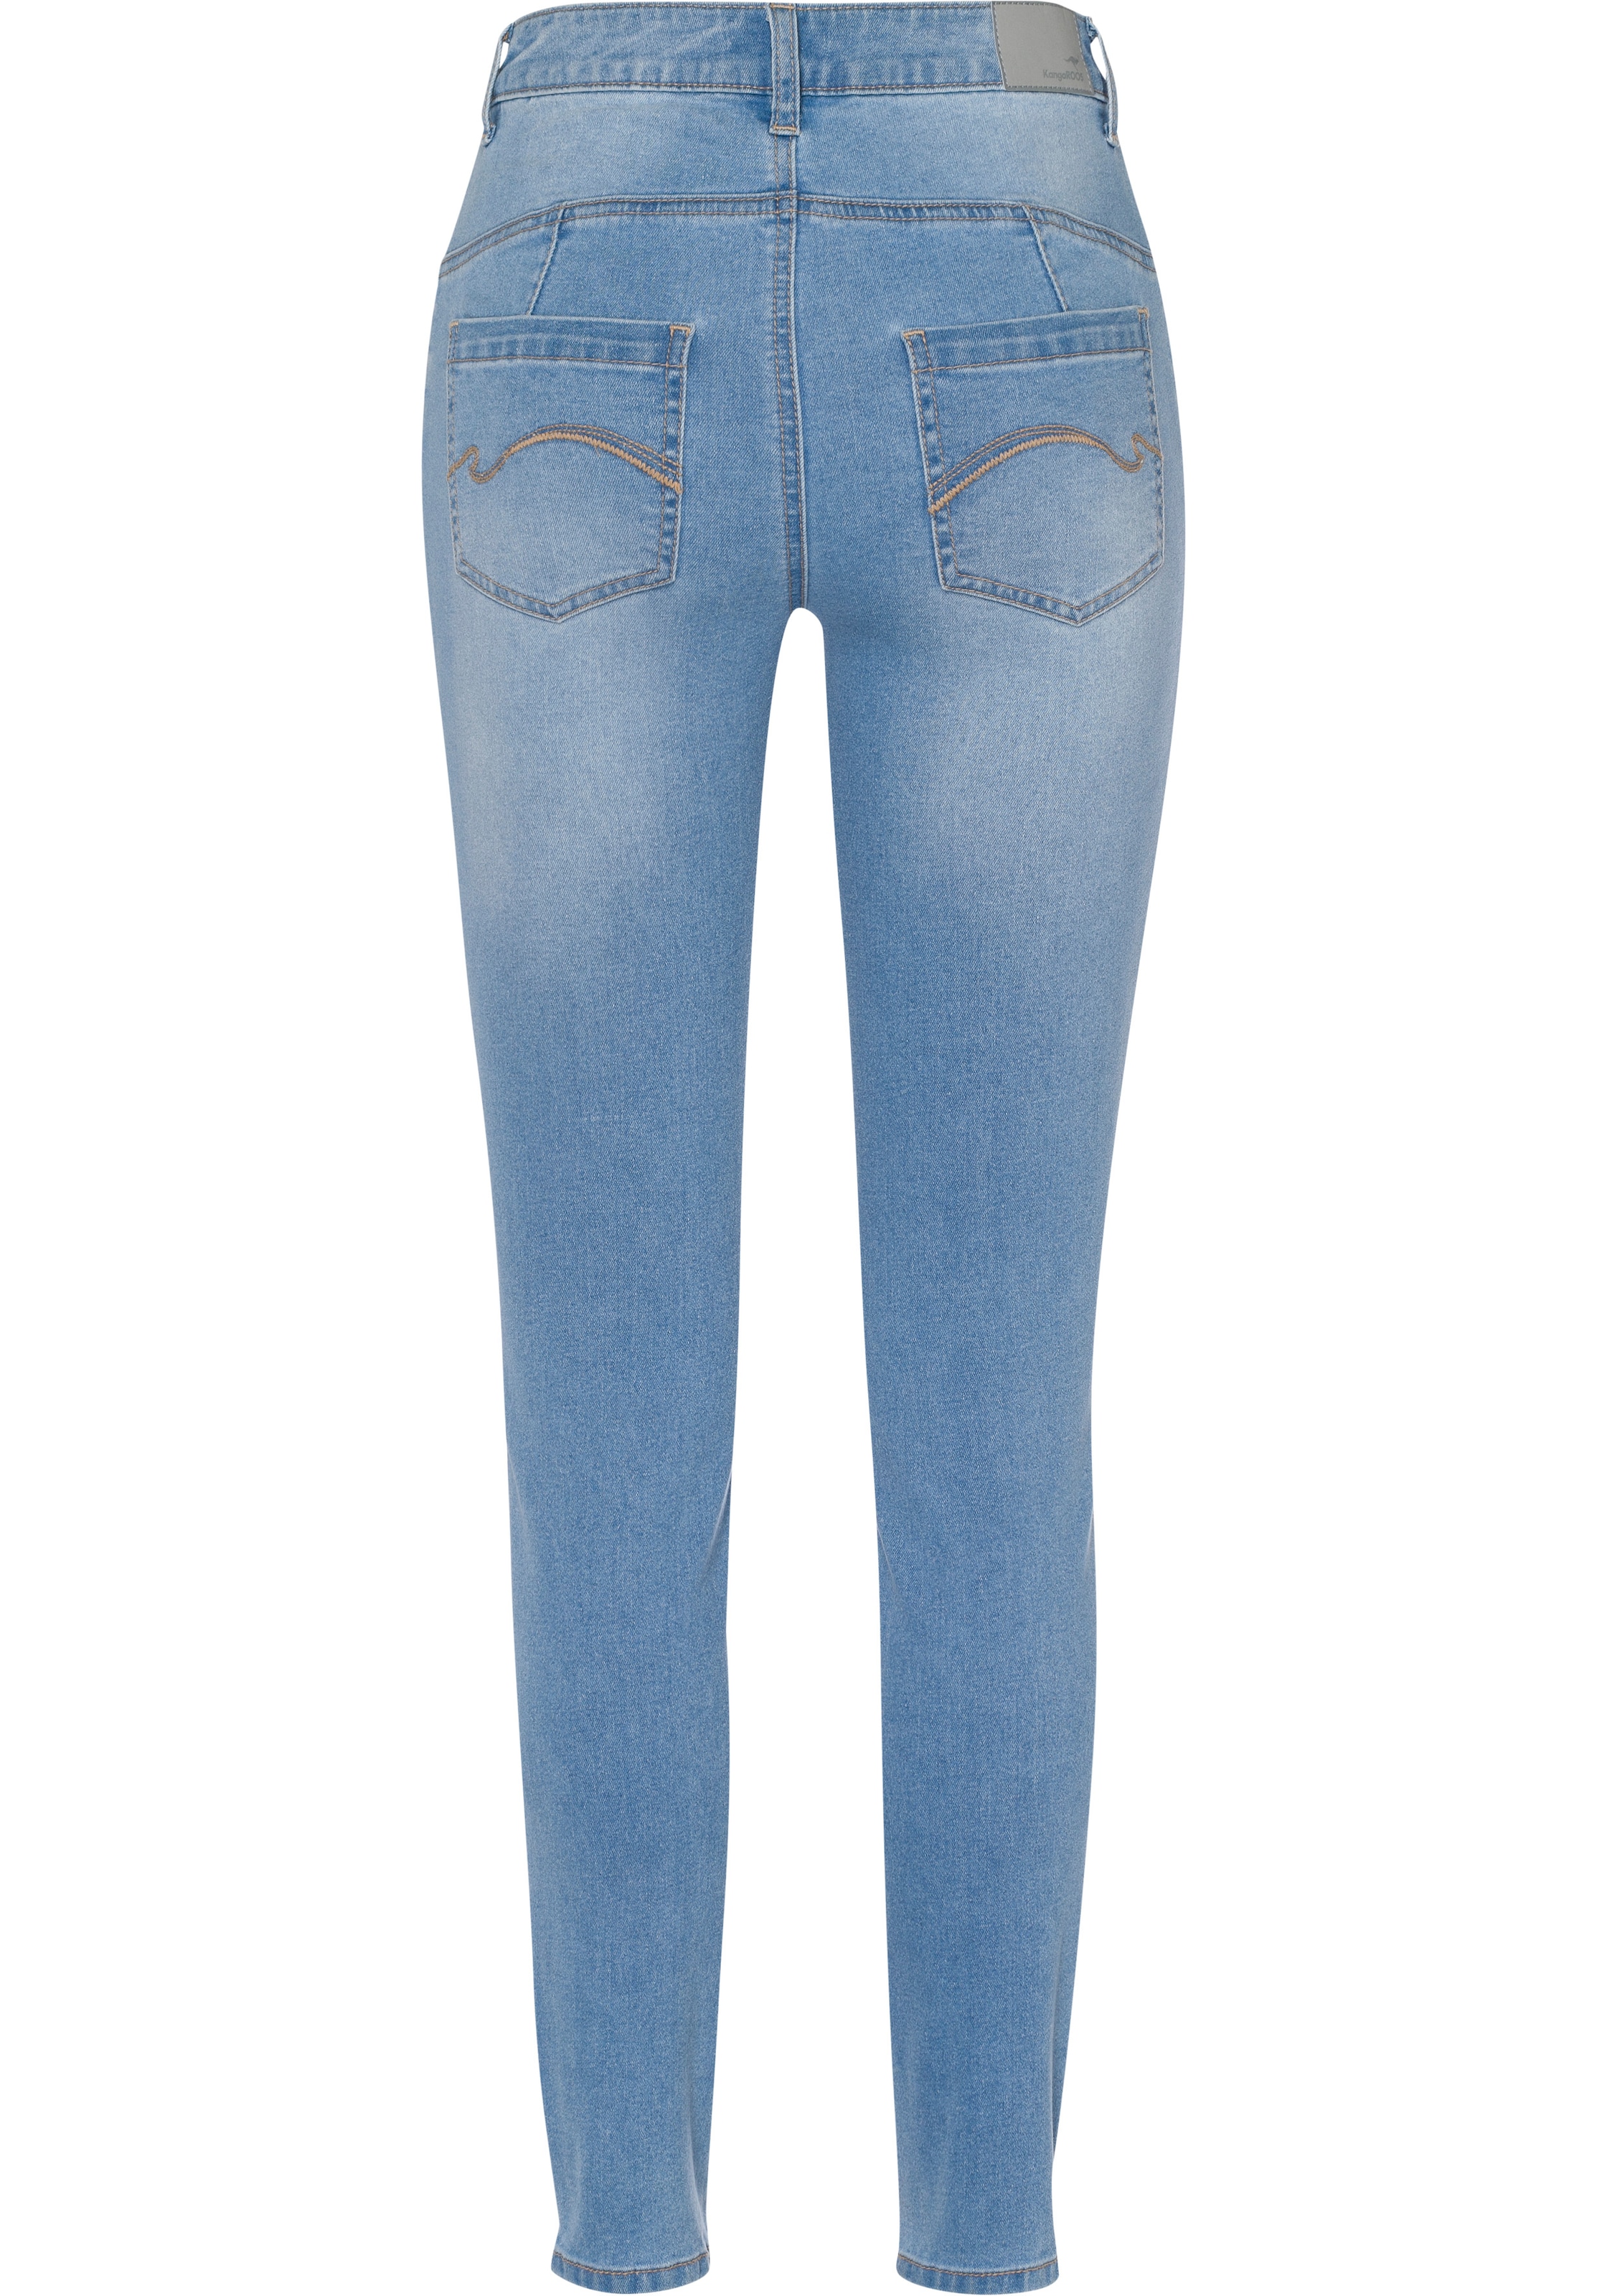 OTTO NEUE KangaROOS SLIM bei WAIST Slim-fit-Jeans »CROPPED online KOLLEKTION FIT«, HIGH